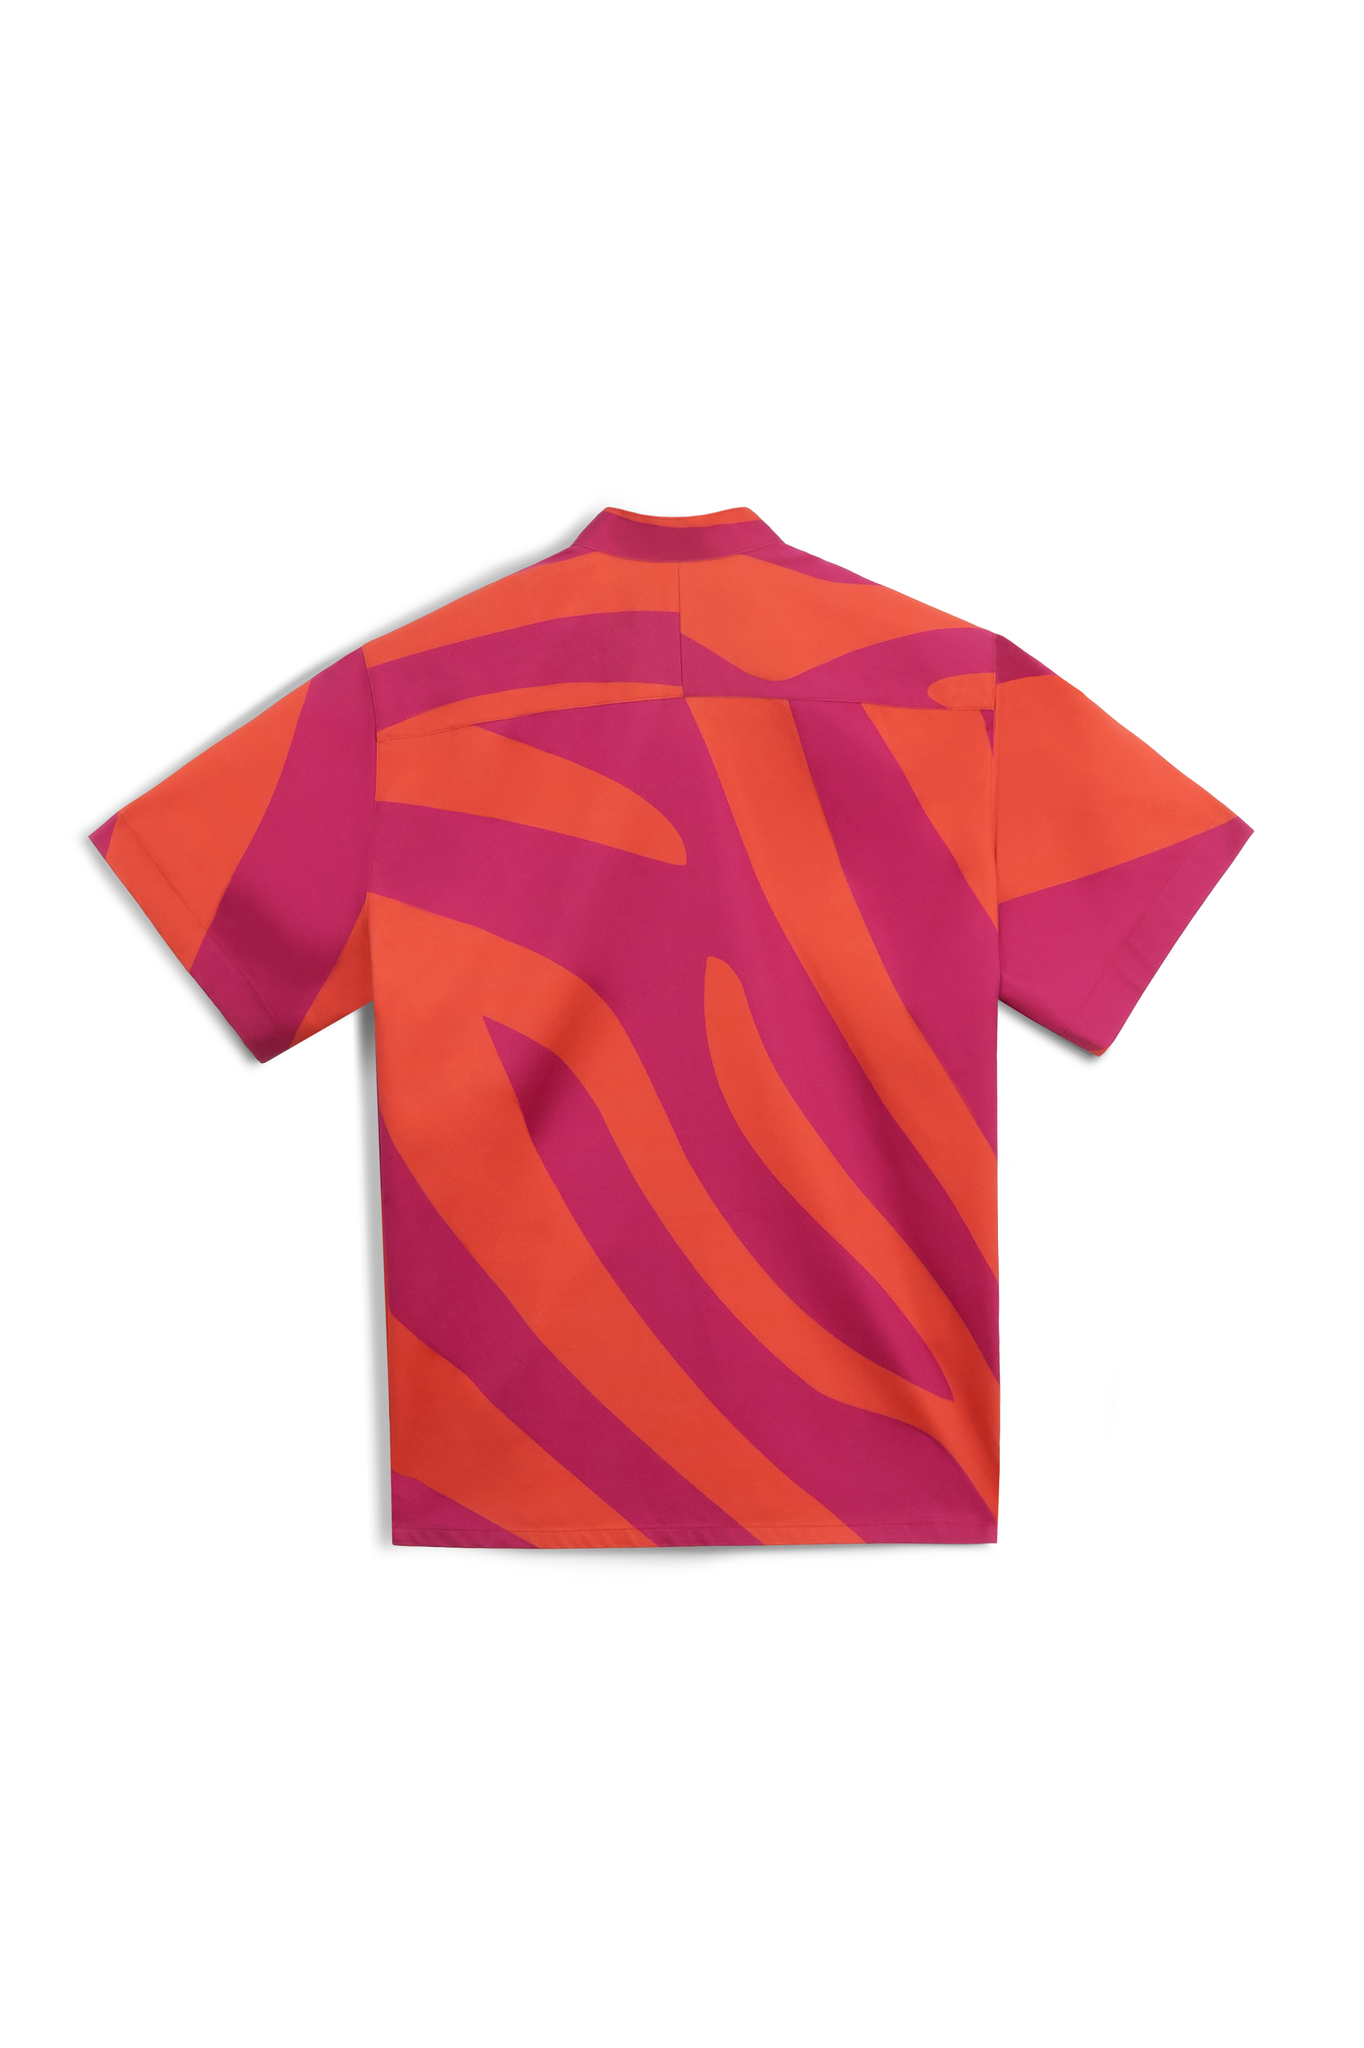 Zebra Printed Shirt - Orange